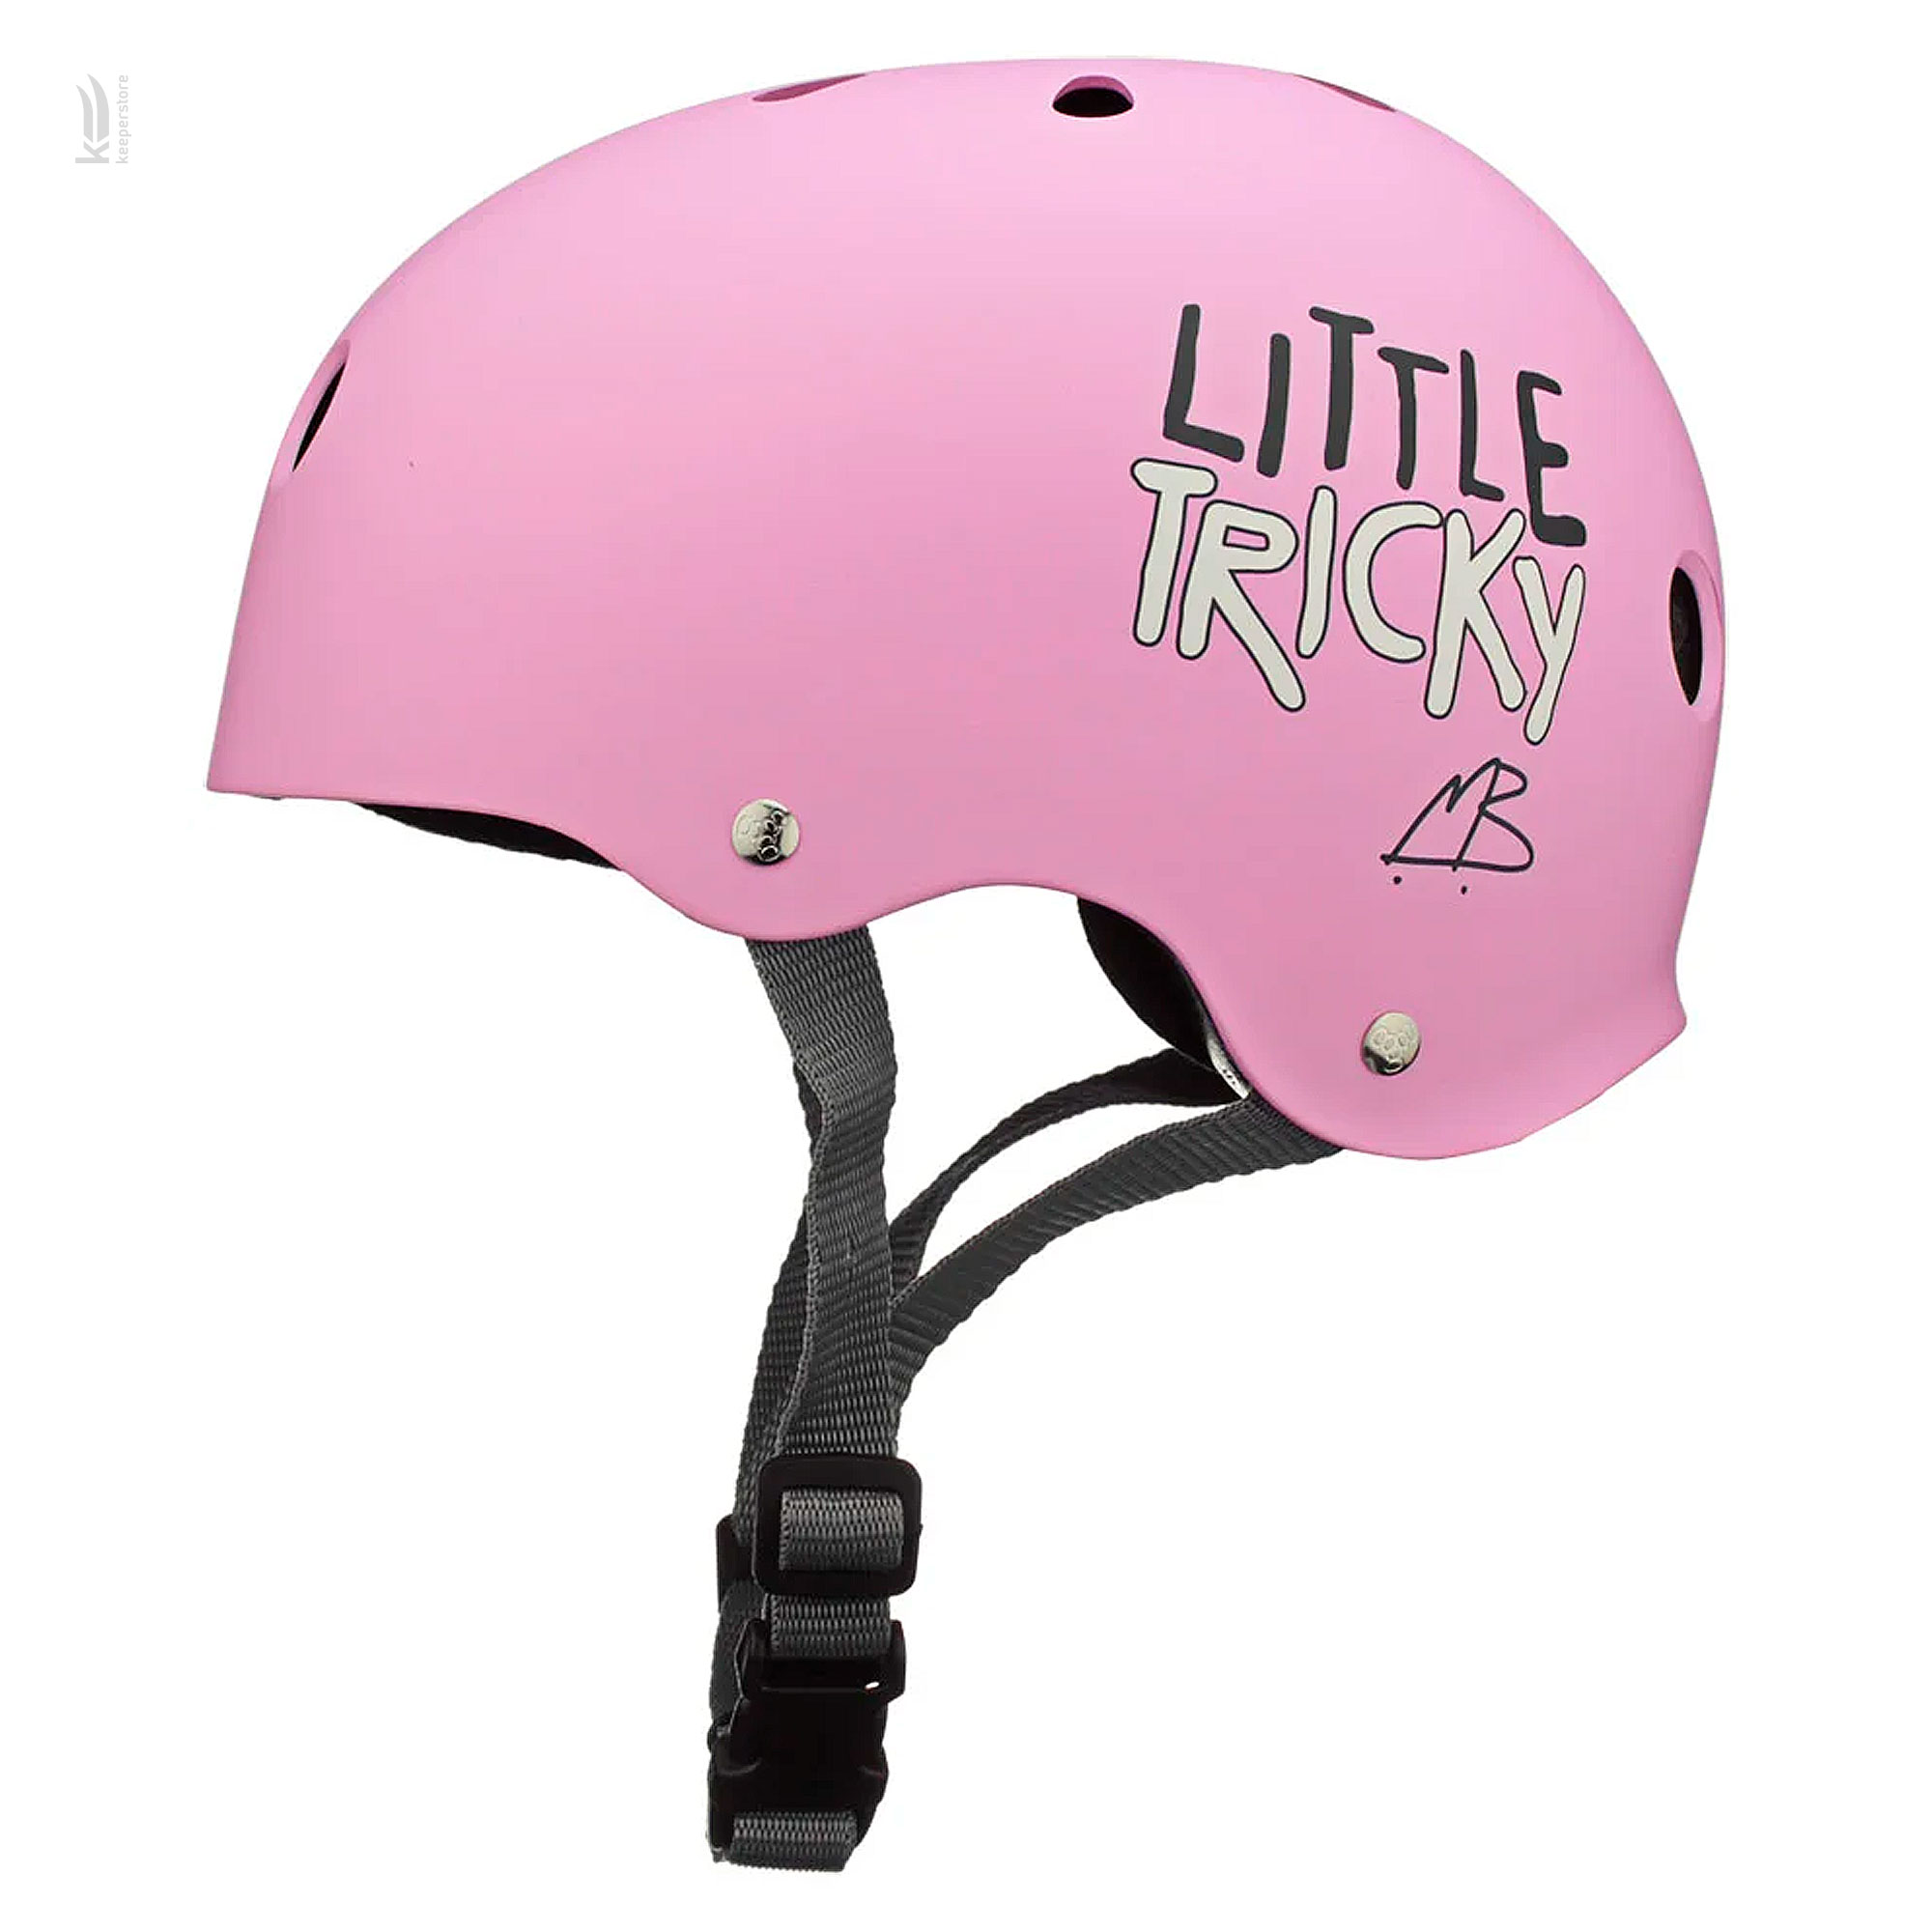 Характеристики шлем велосипедный Triple8 Little Tricky Pink Rubber